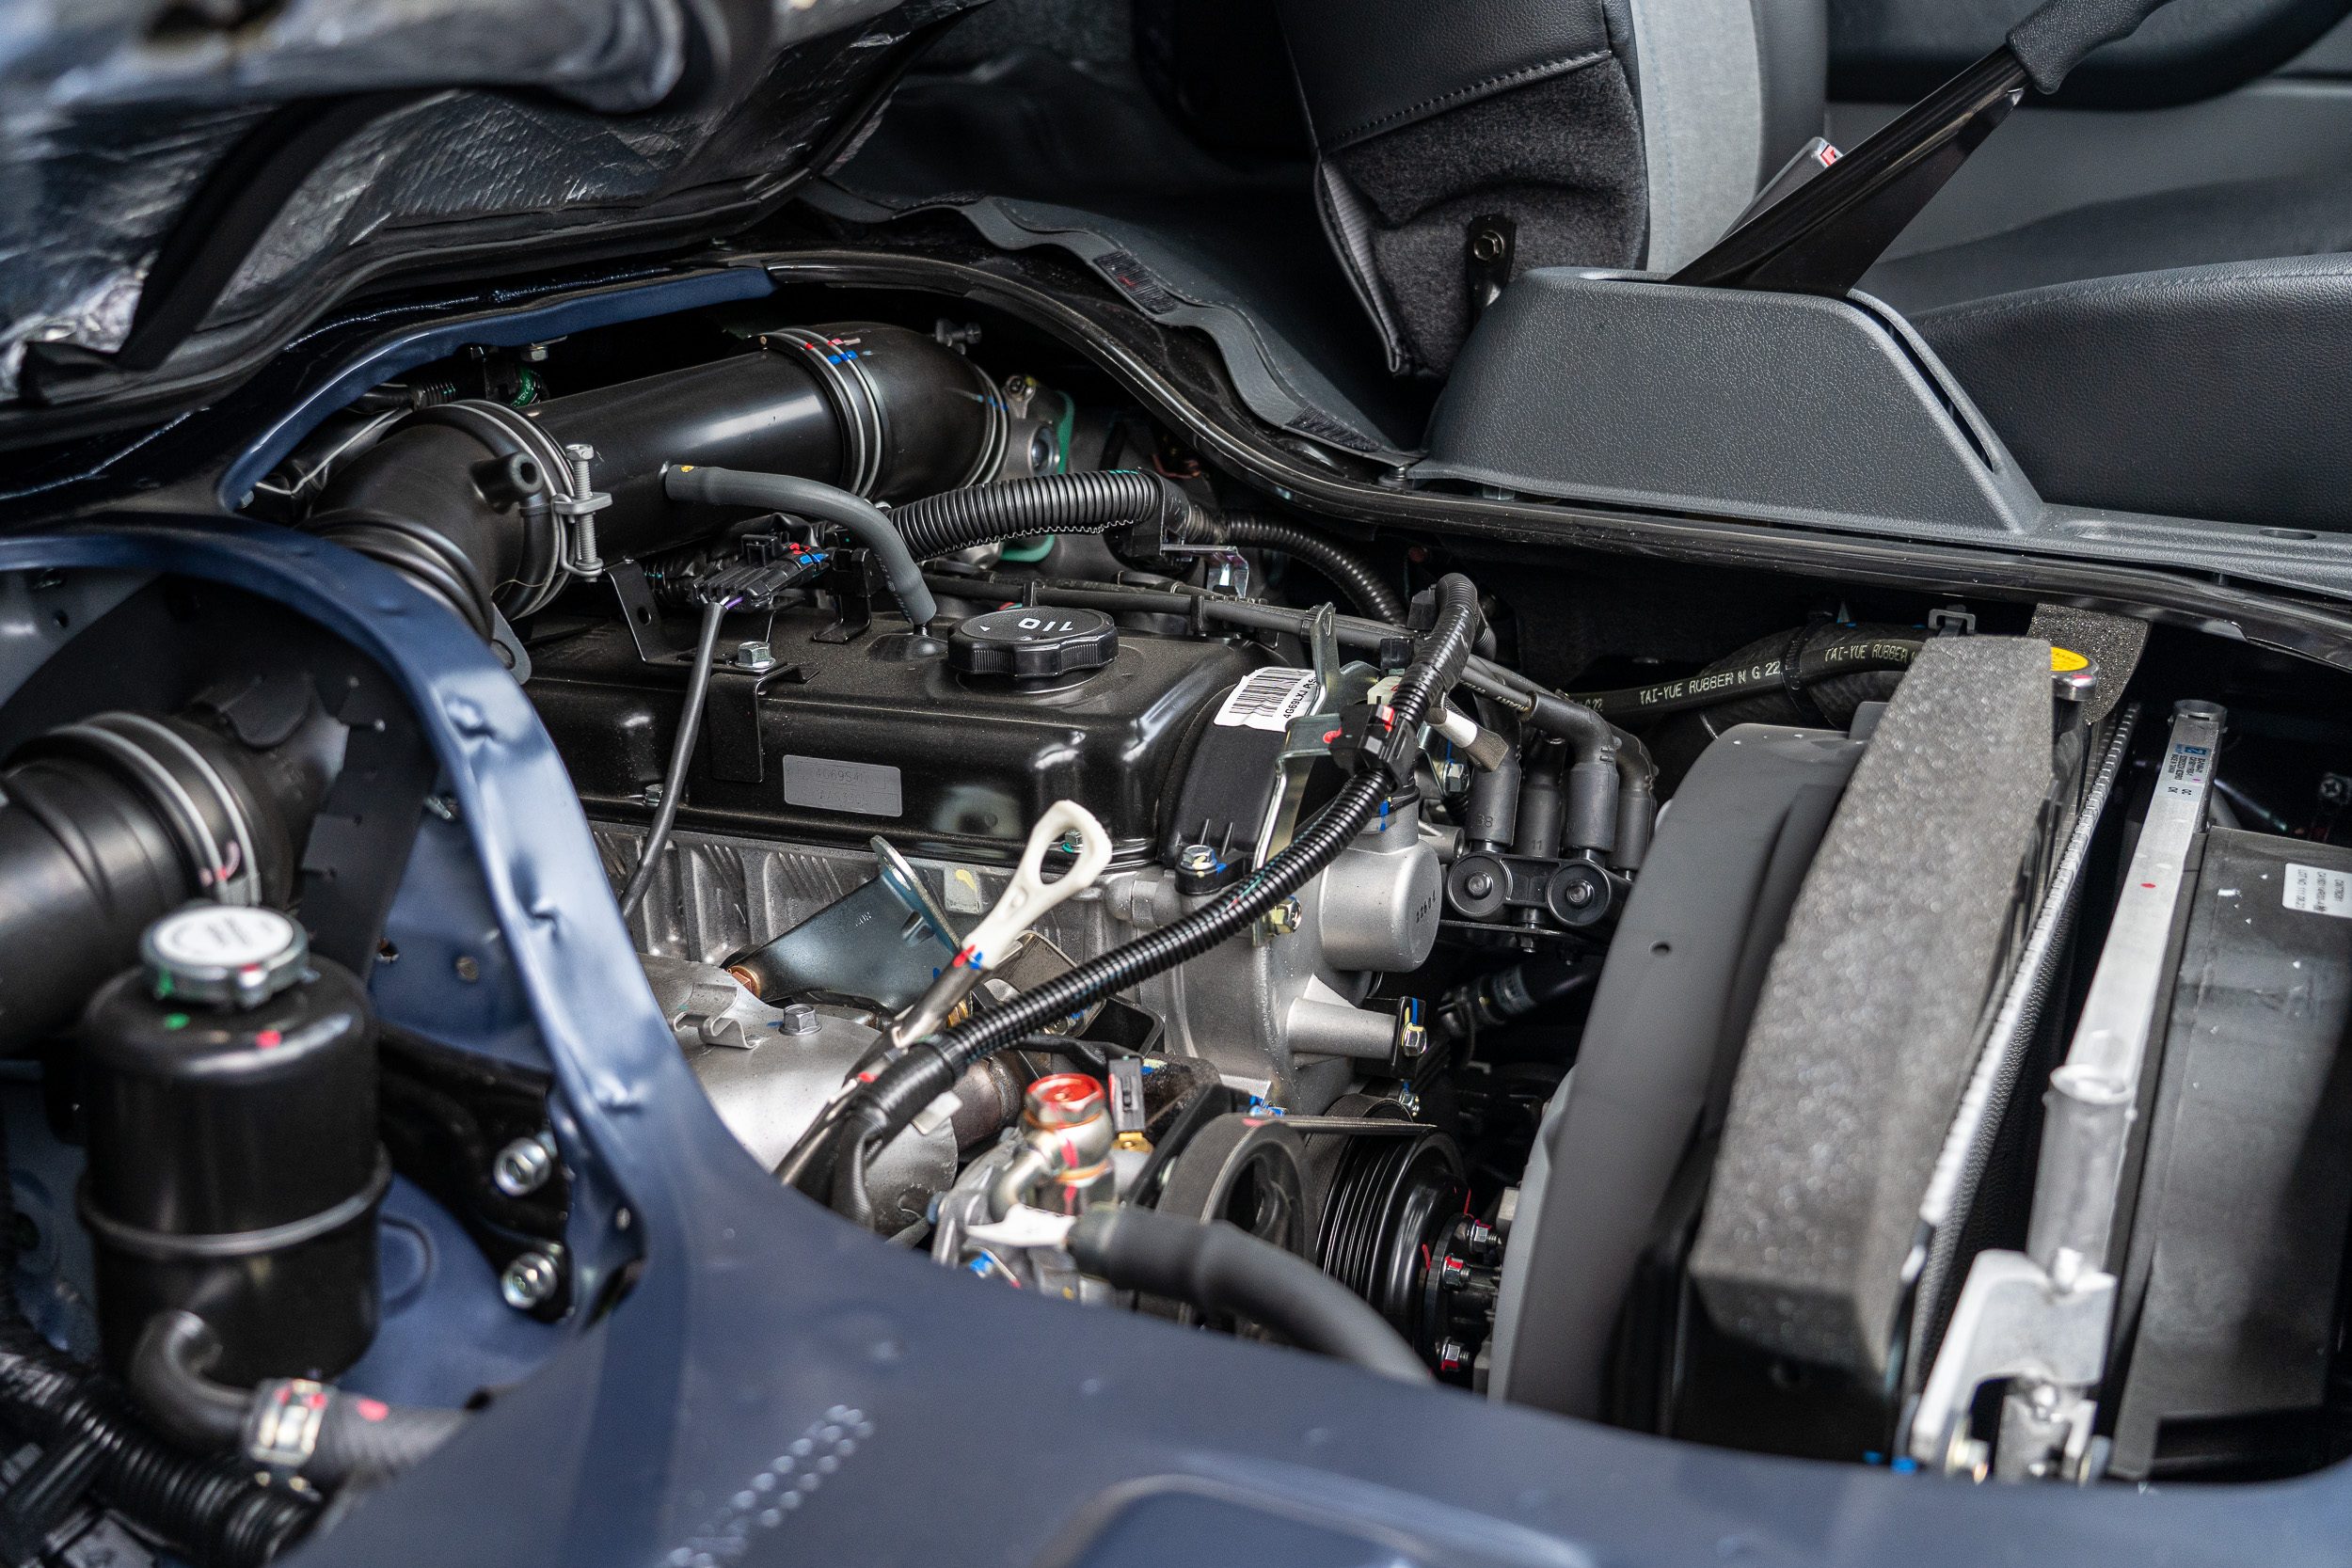 P350 Hybrid 配置了一具 2.4 升自然進氣汽油引擎。